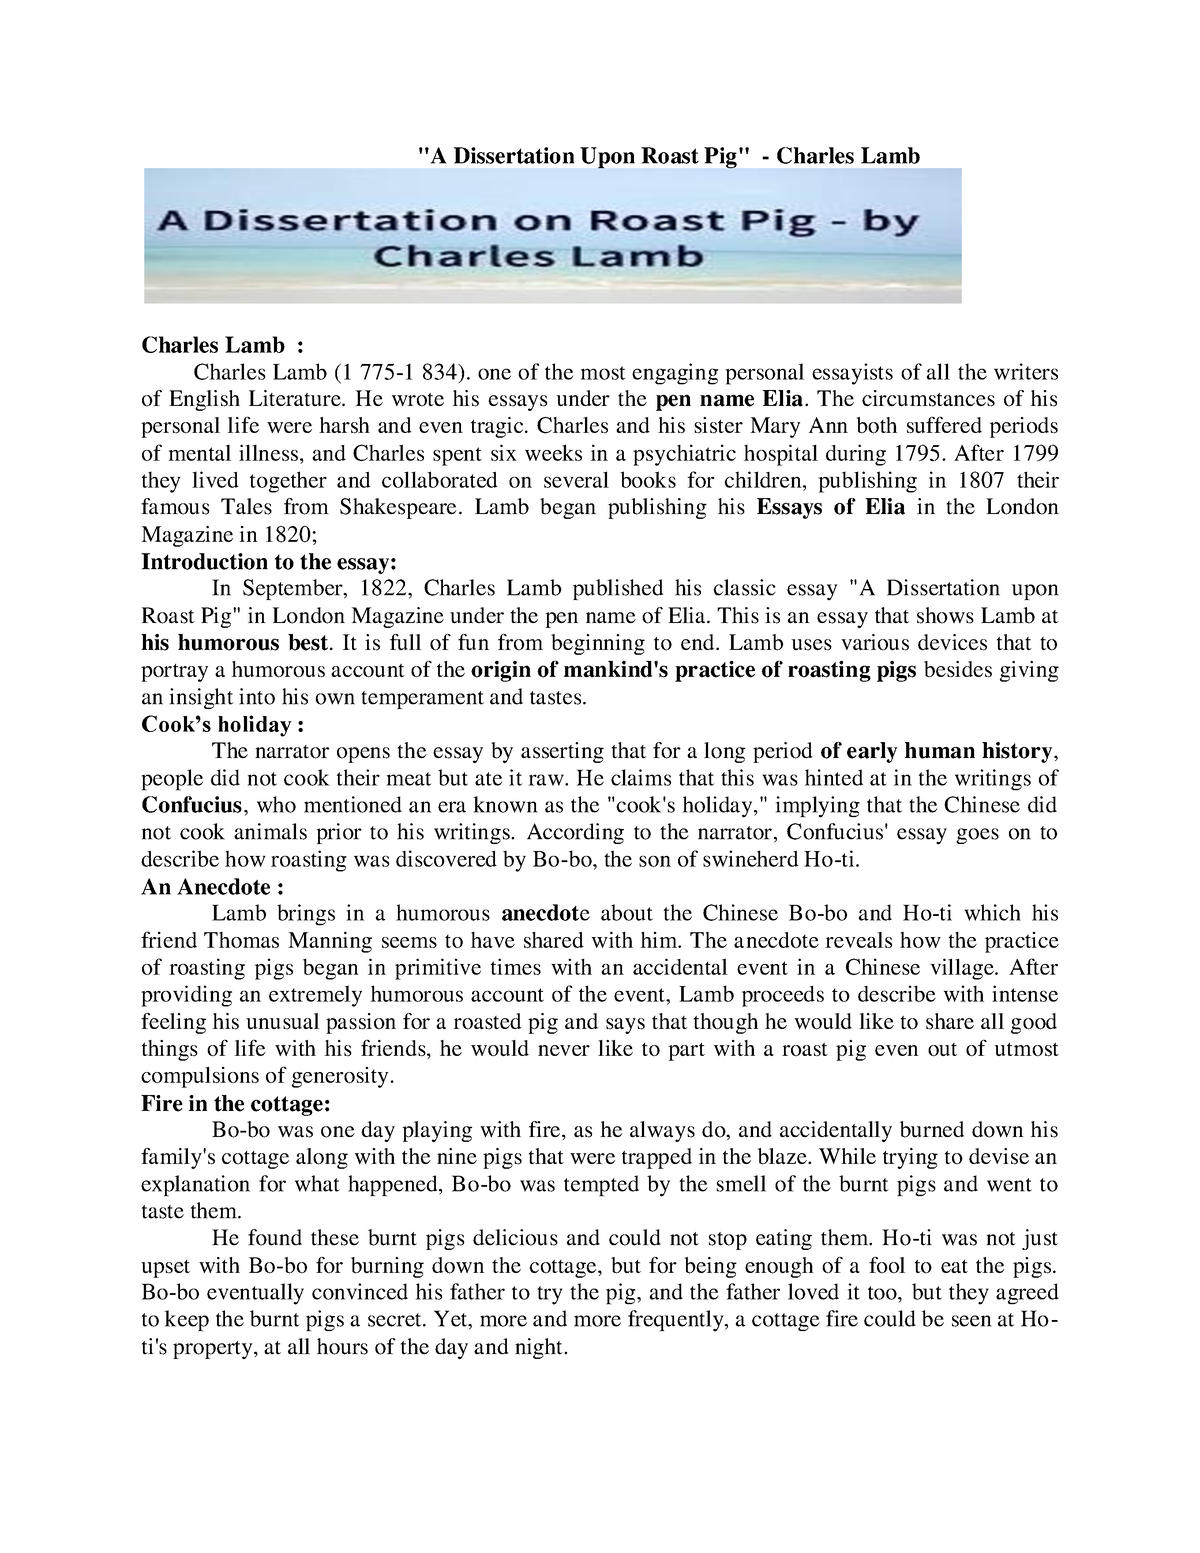 a dissertation upon roast pig